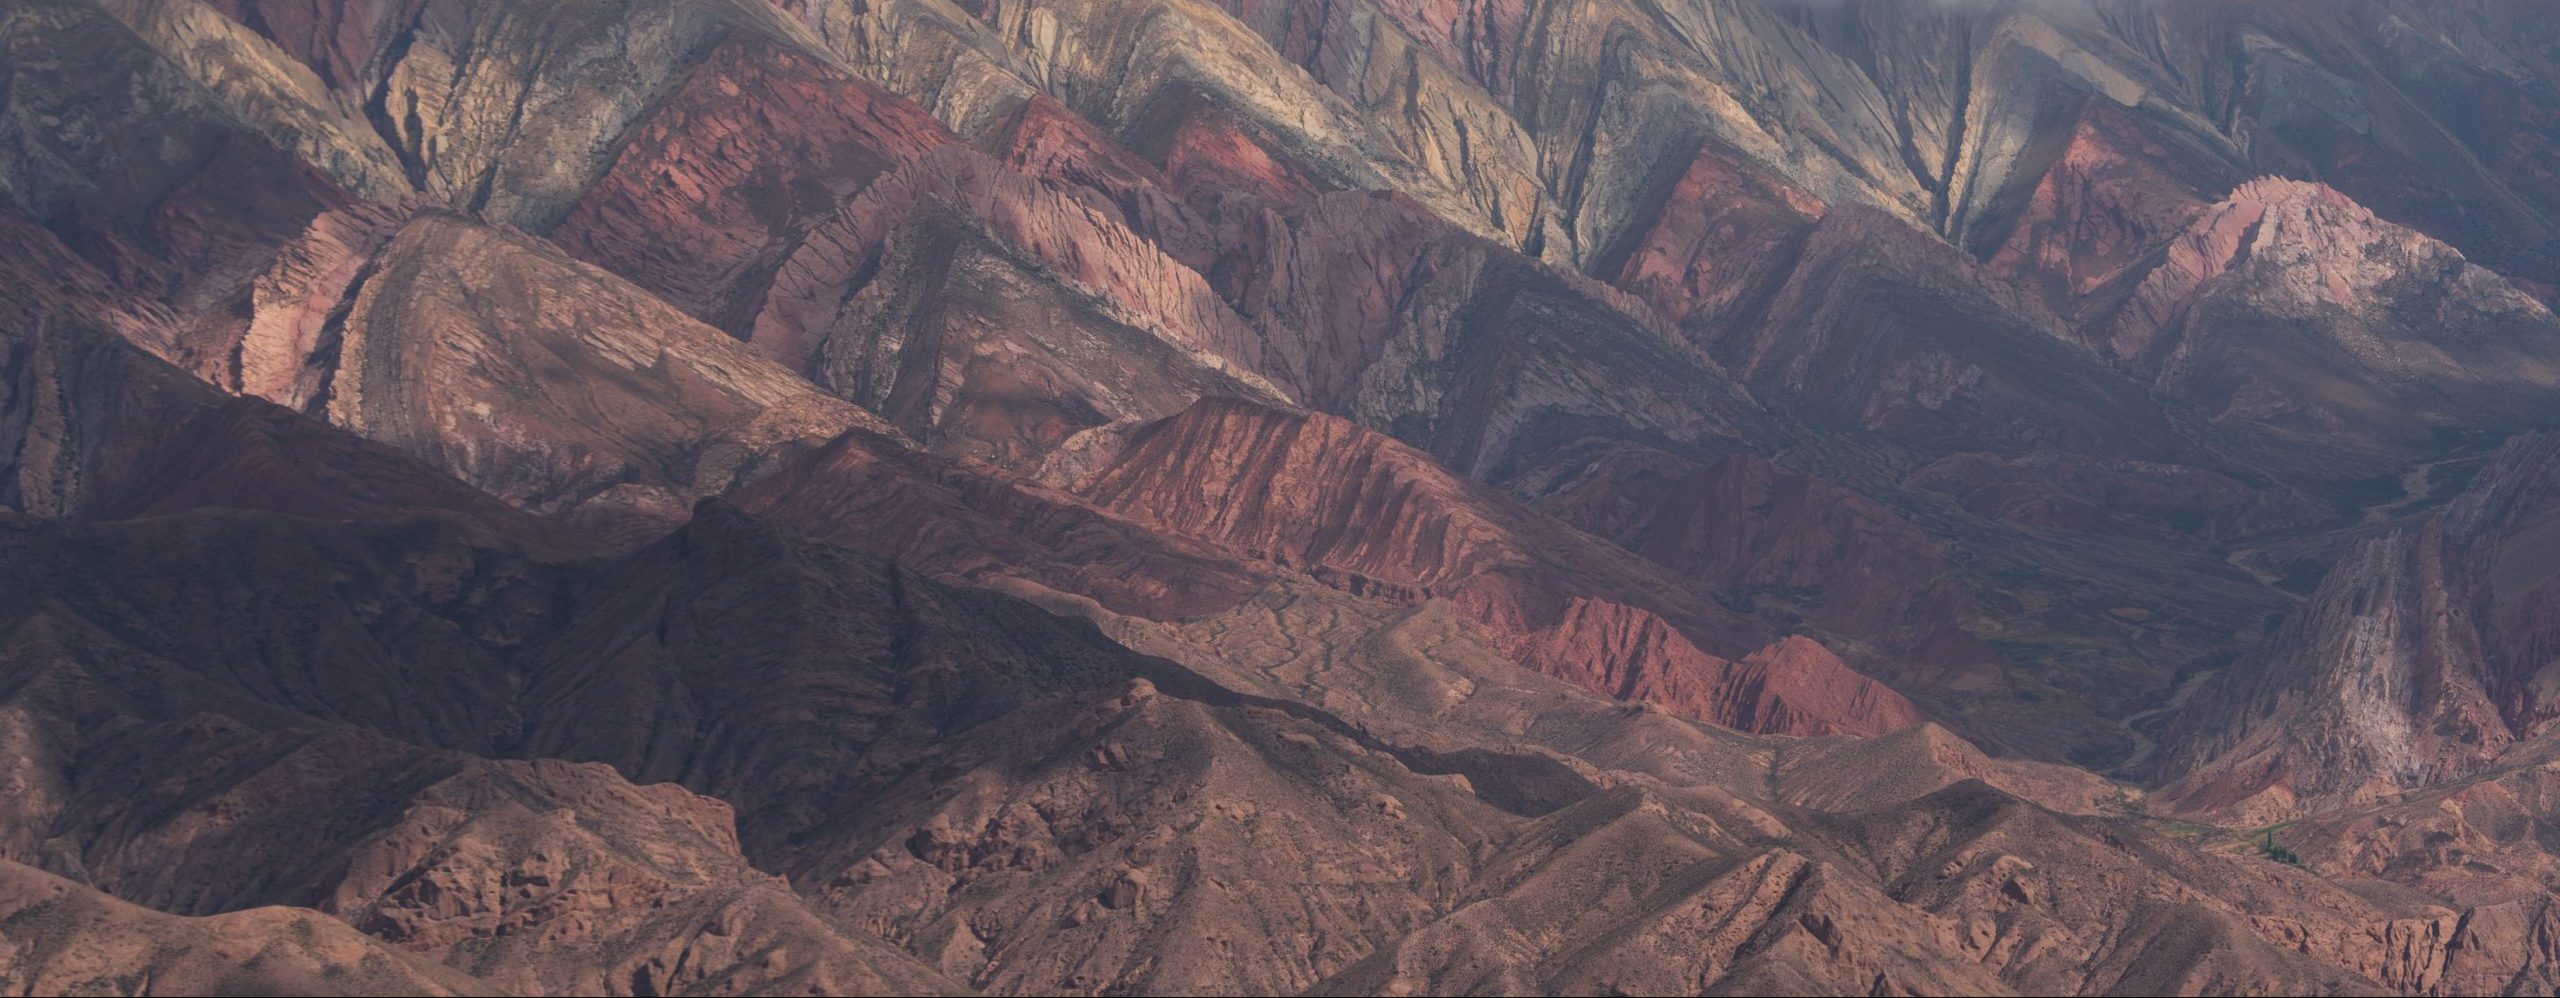 foto de montañas rojas cordillera latinoamericana